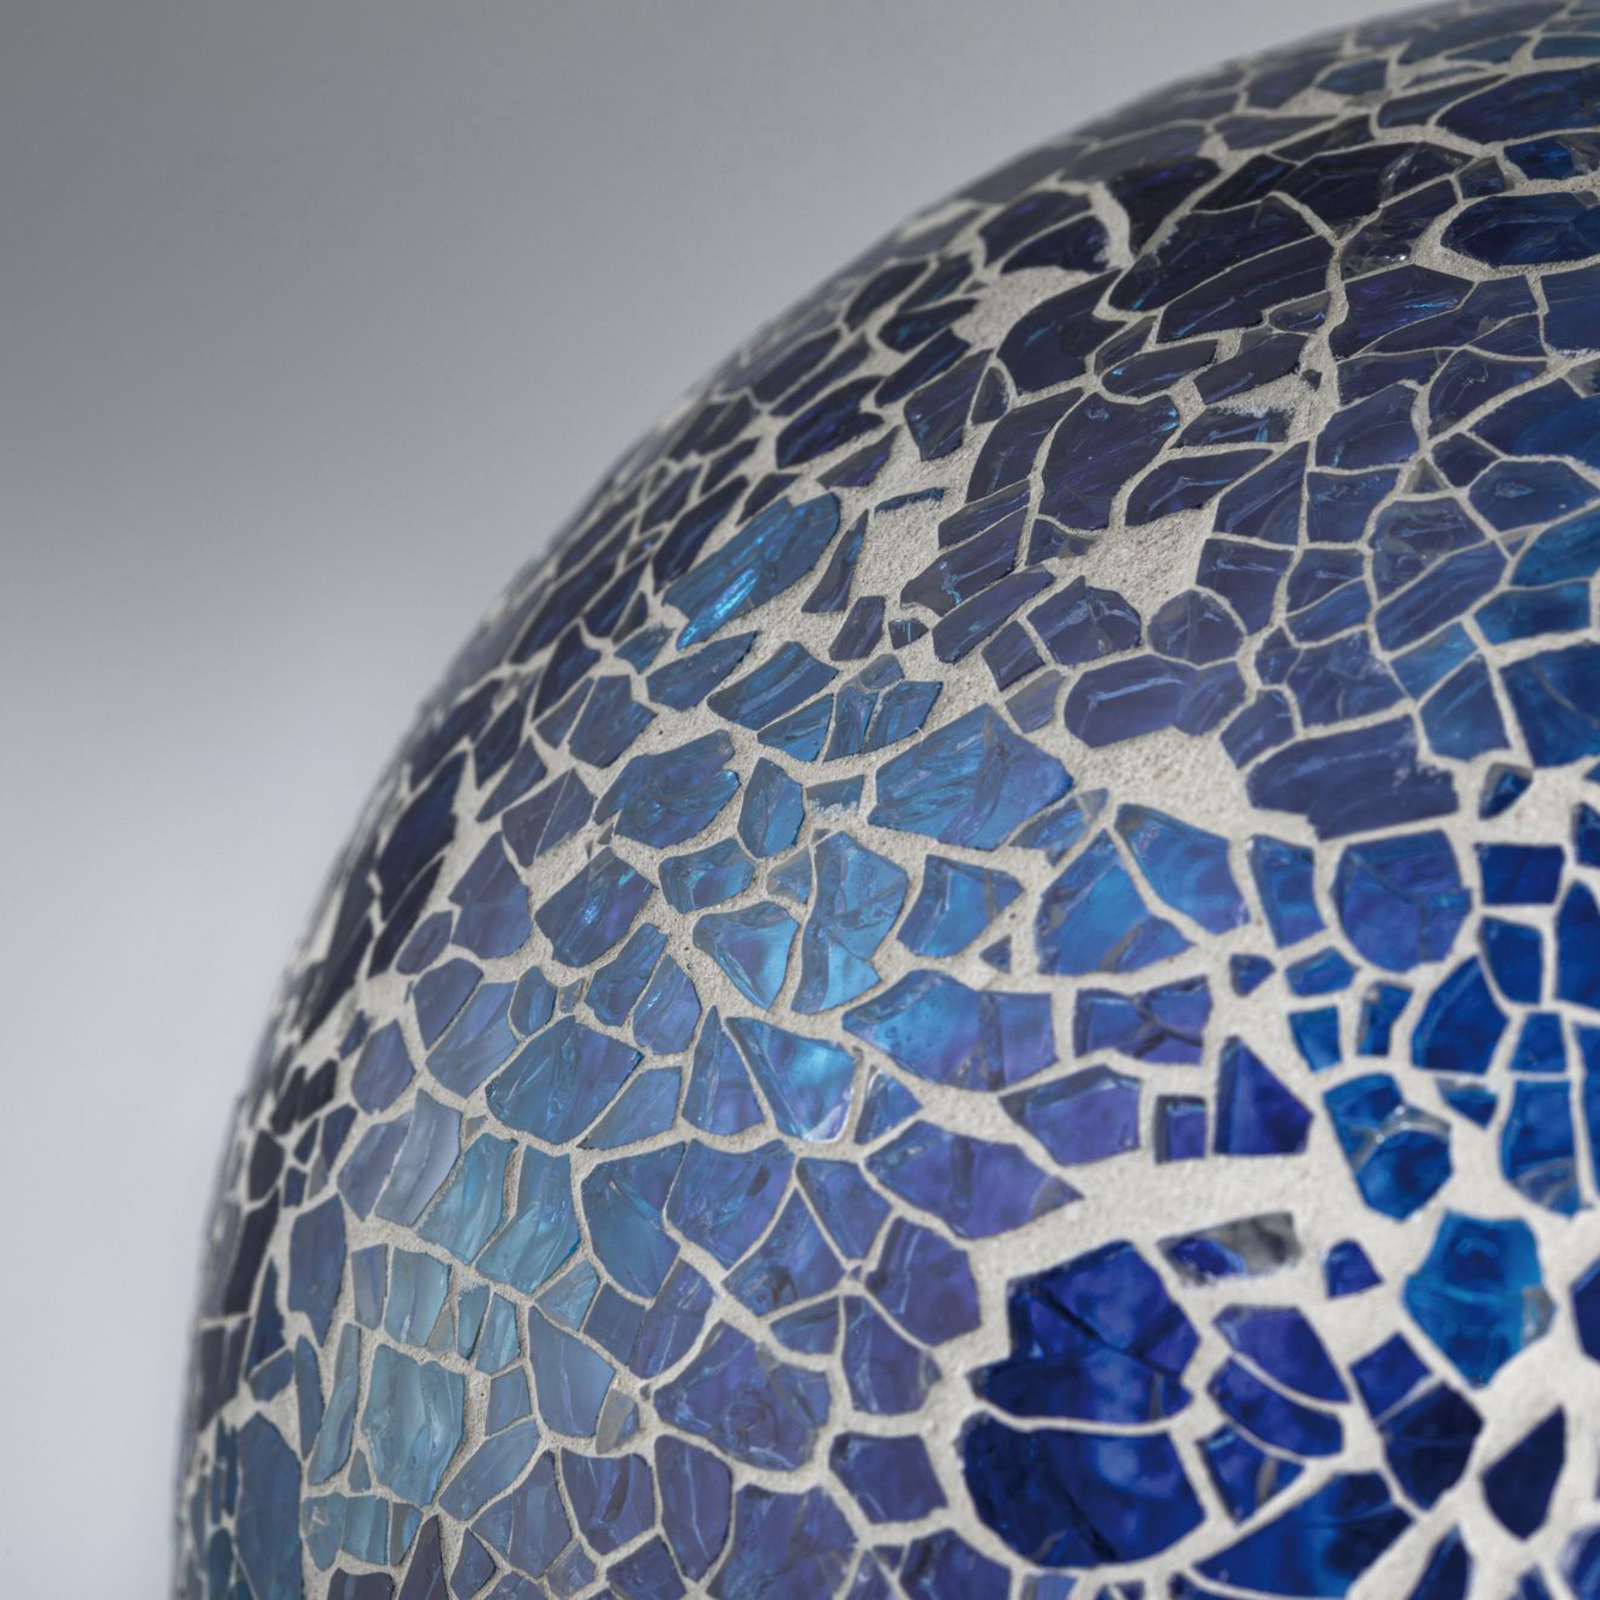 Paulmann E27 LED globe 5W Miracle Mosaic blå